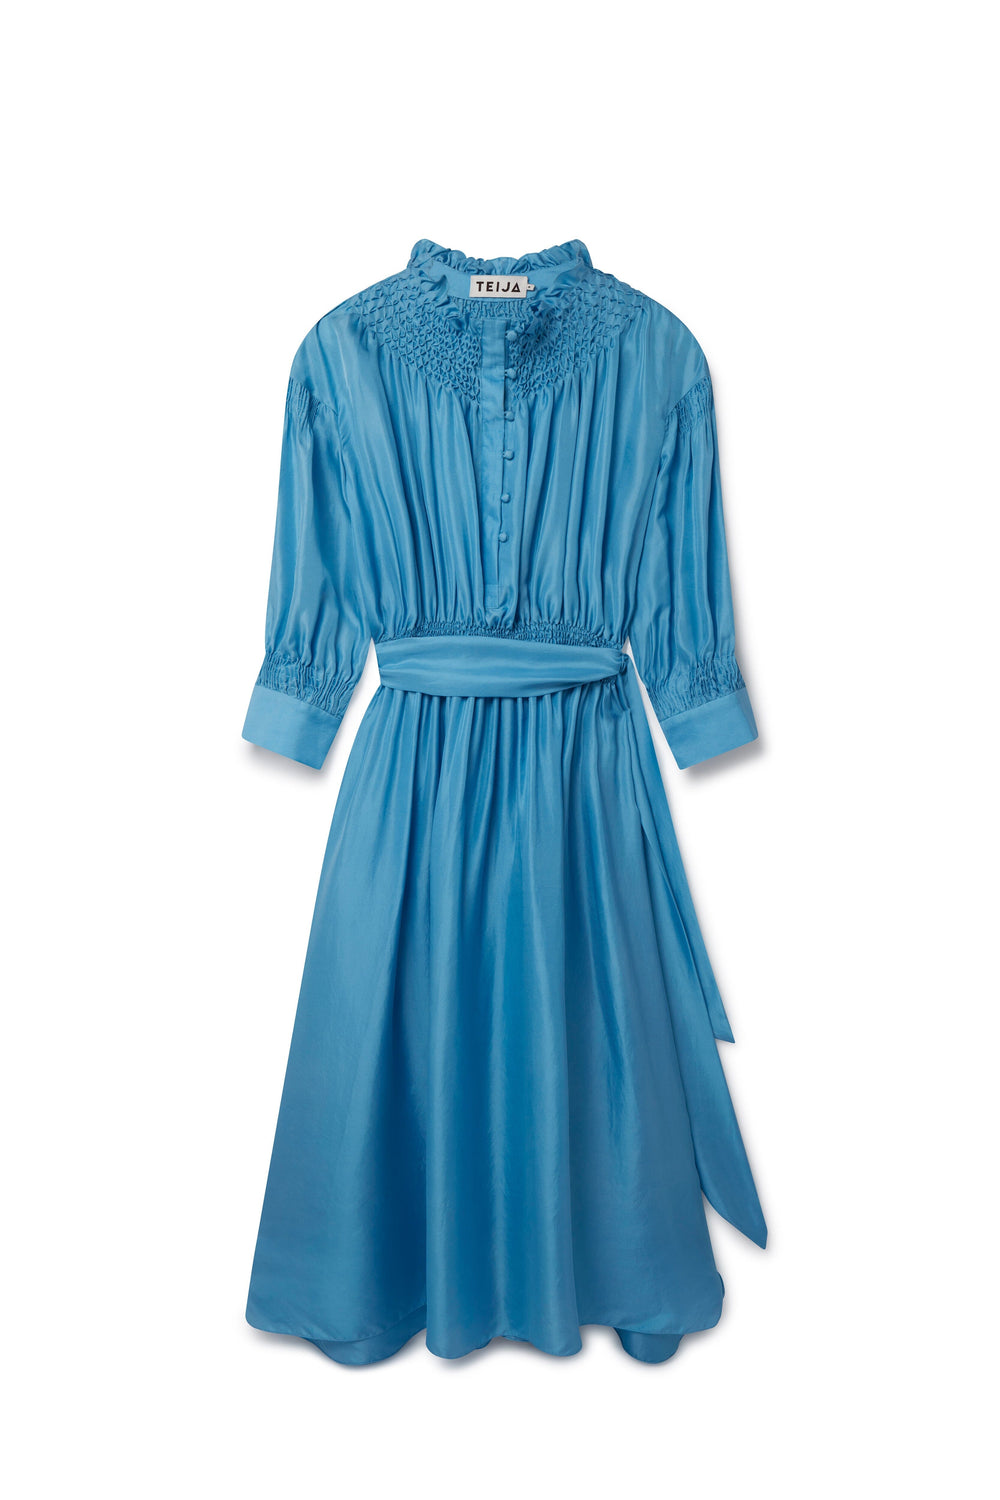 Agnes Tea Dress in Blue Womenswear TEIJA 